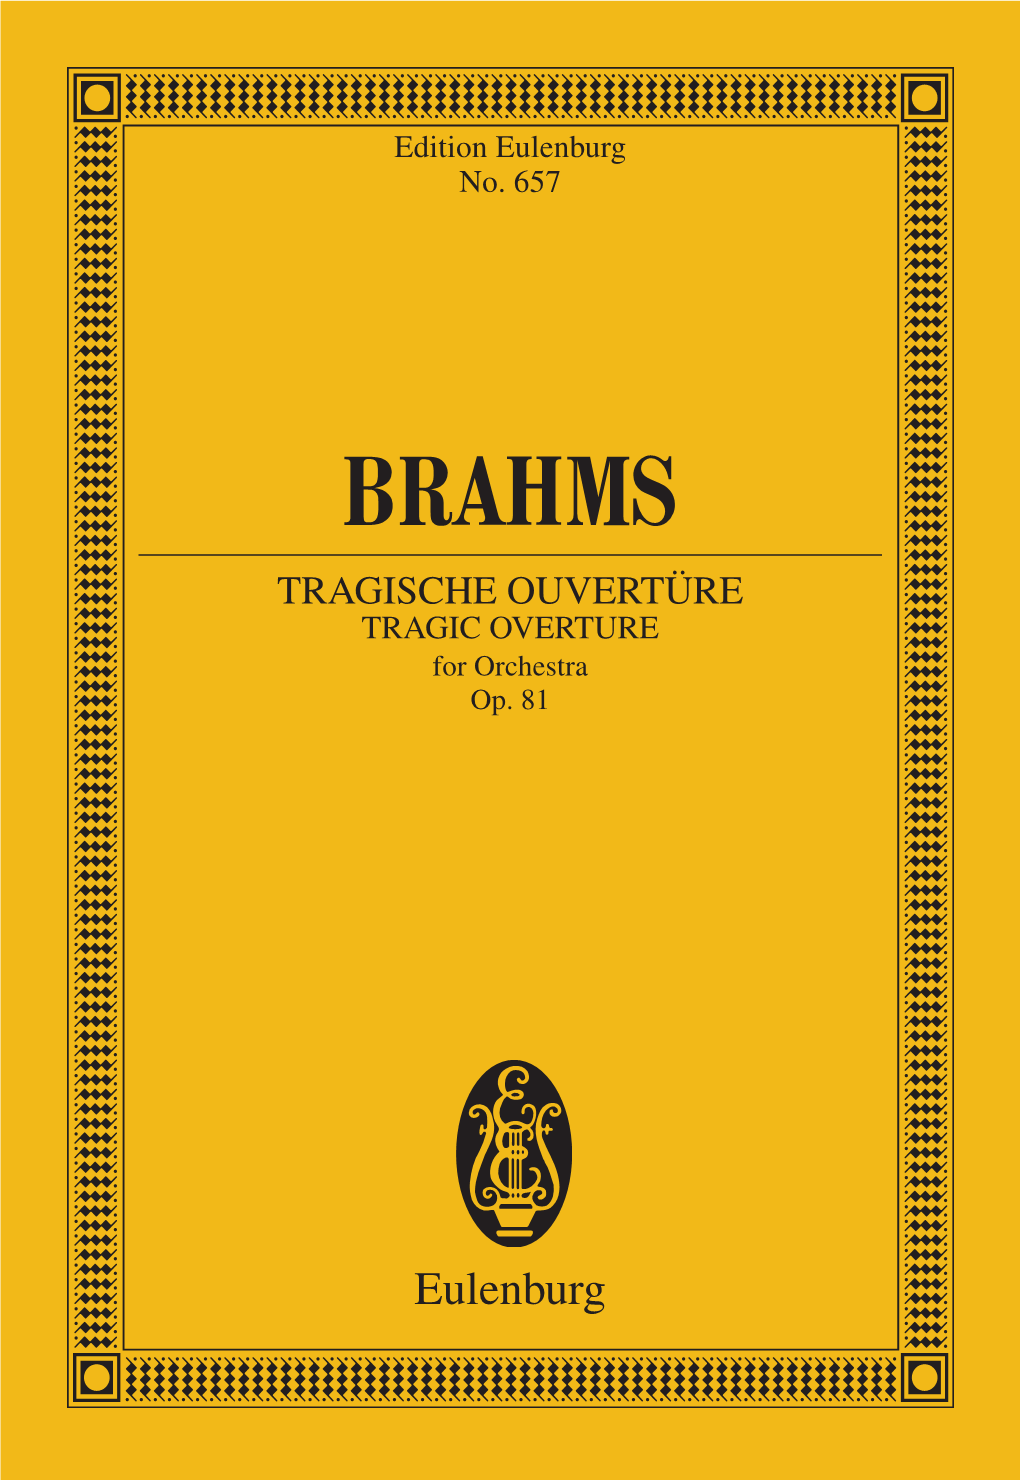 BRAHMS TRAGISCHE OUVERTÜRE TRAGIC OVERTURE for Orchestra Op